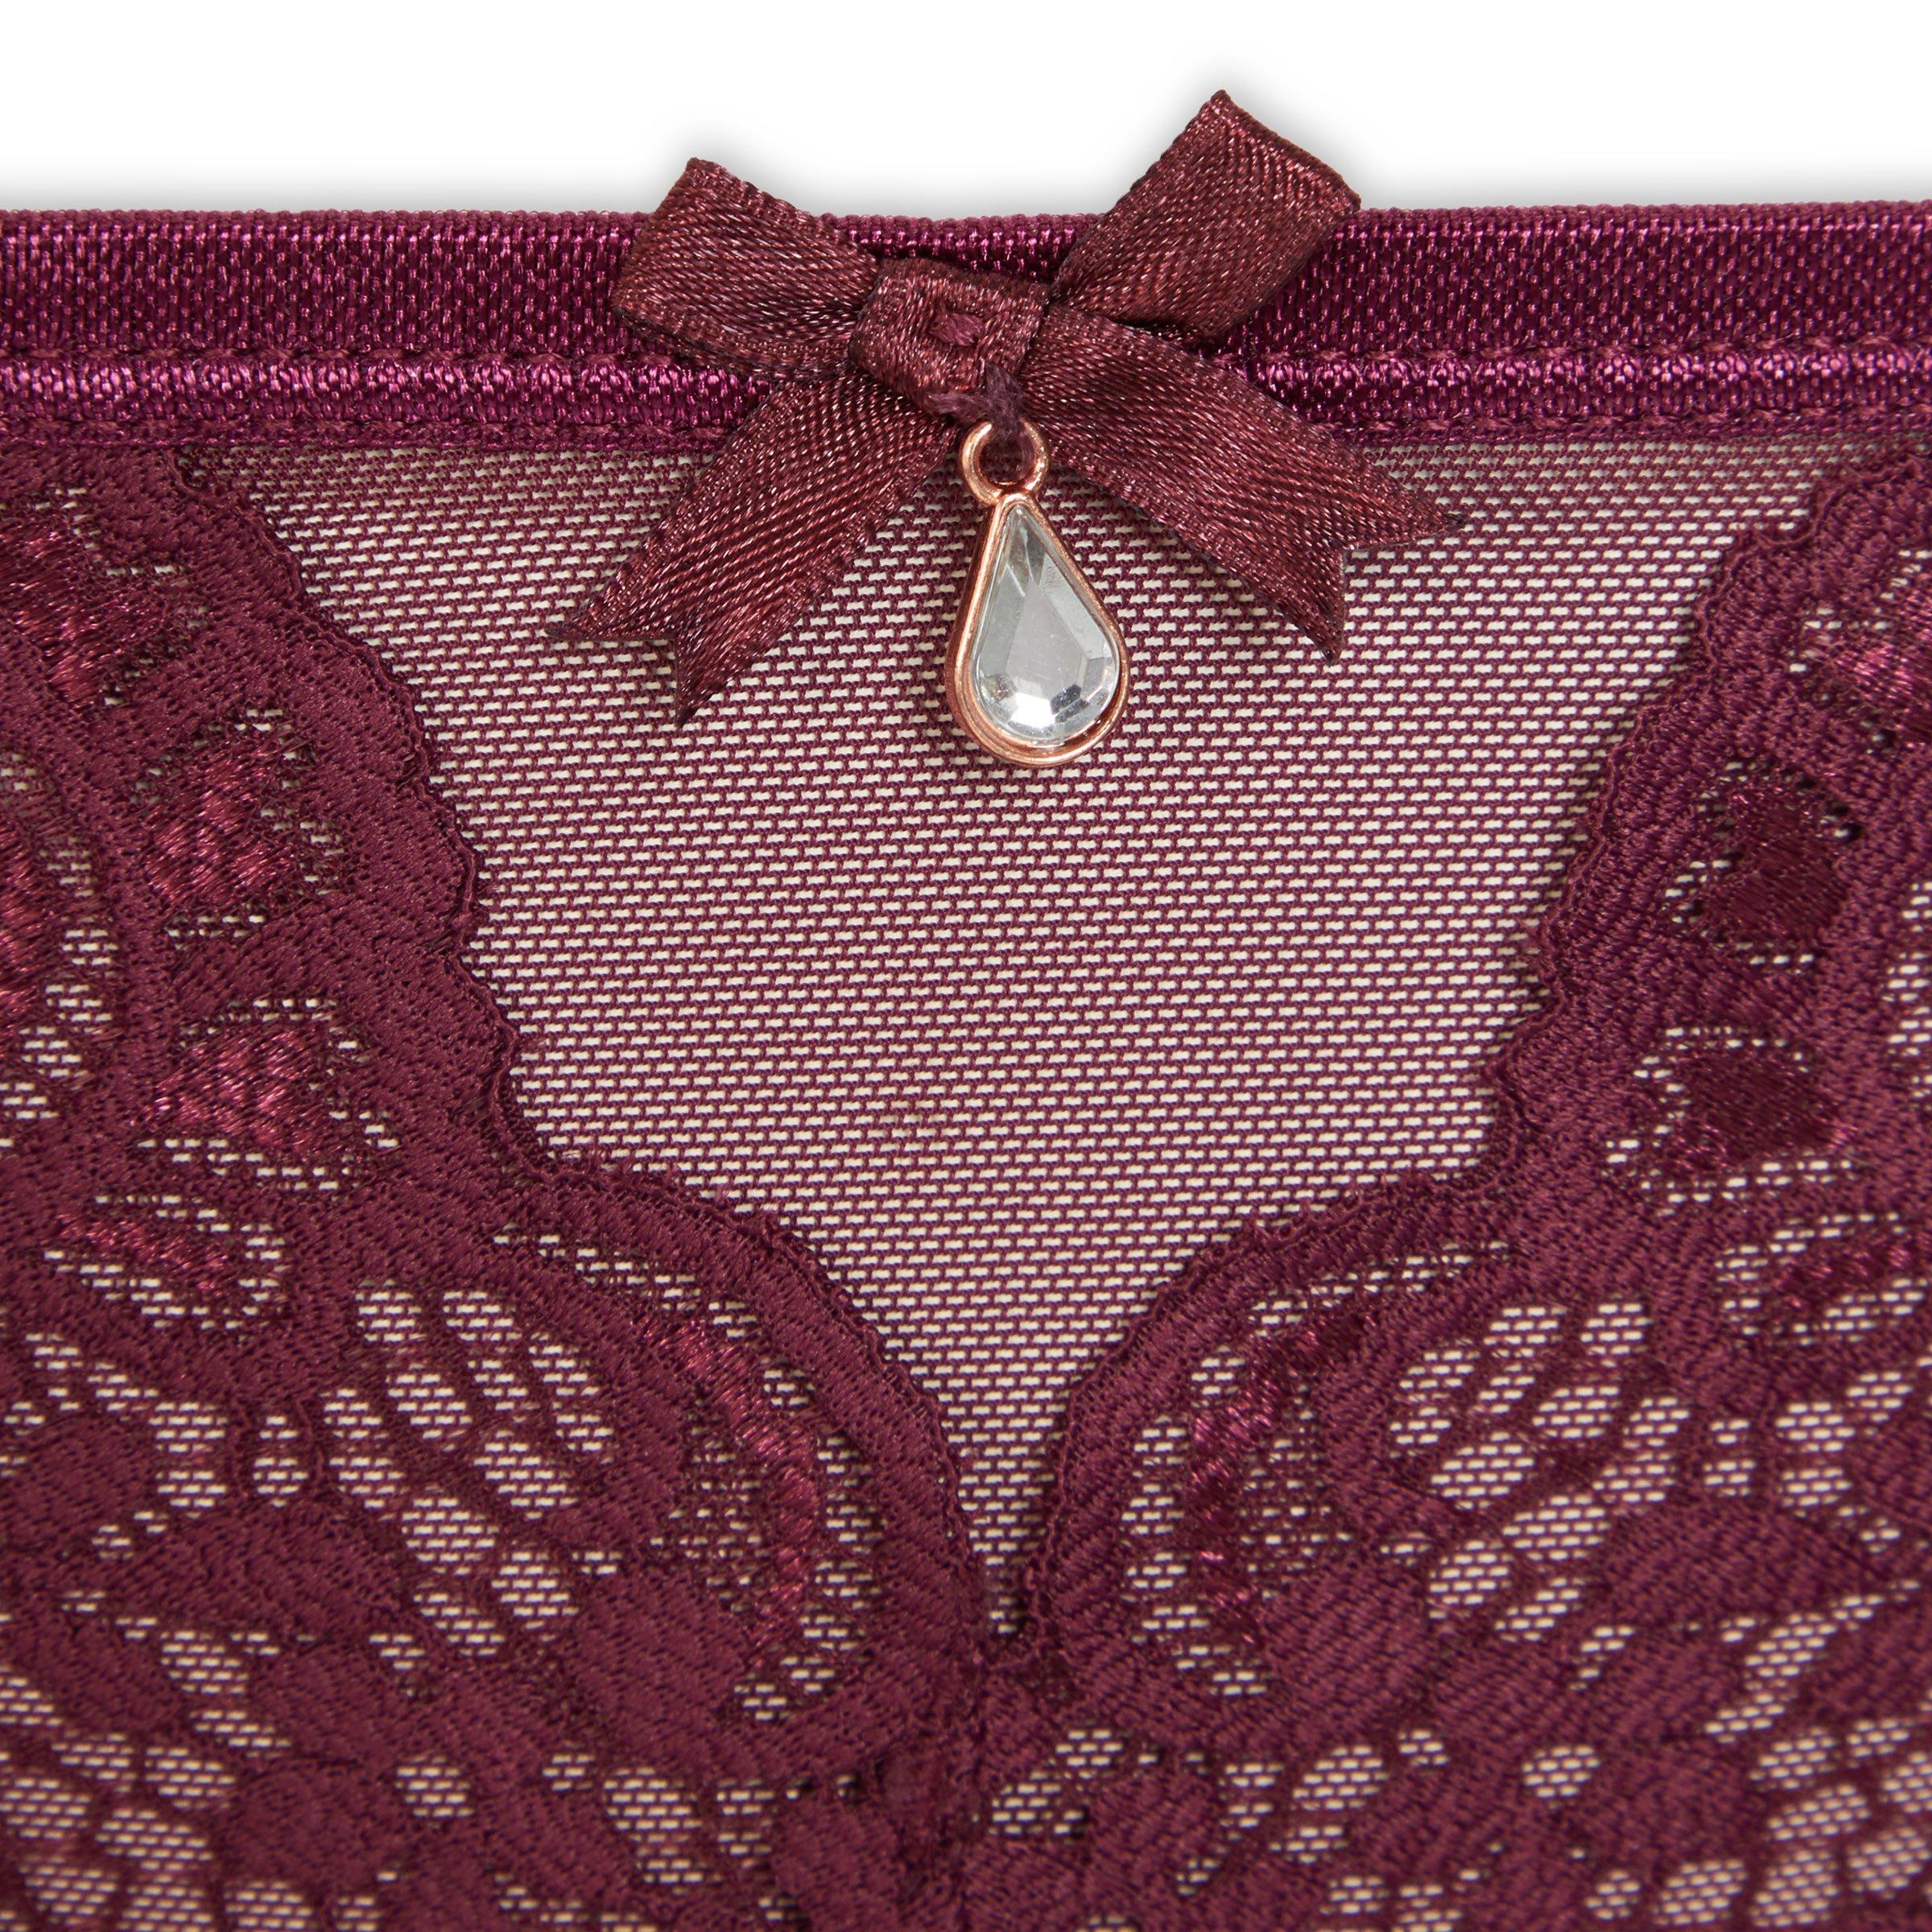 3 Pack Lace Brazilian Panties - Fig/Rose/Barberry – LEGiT